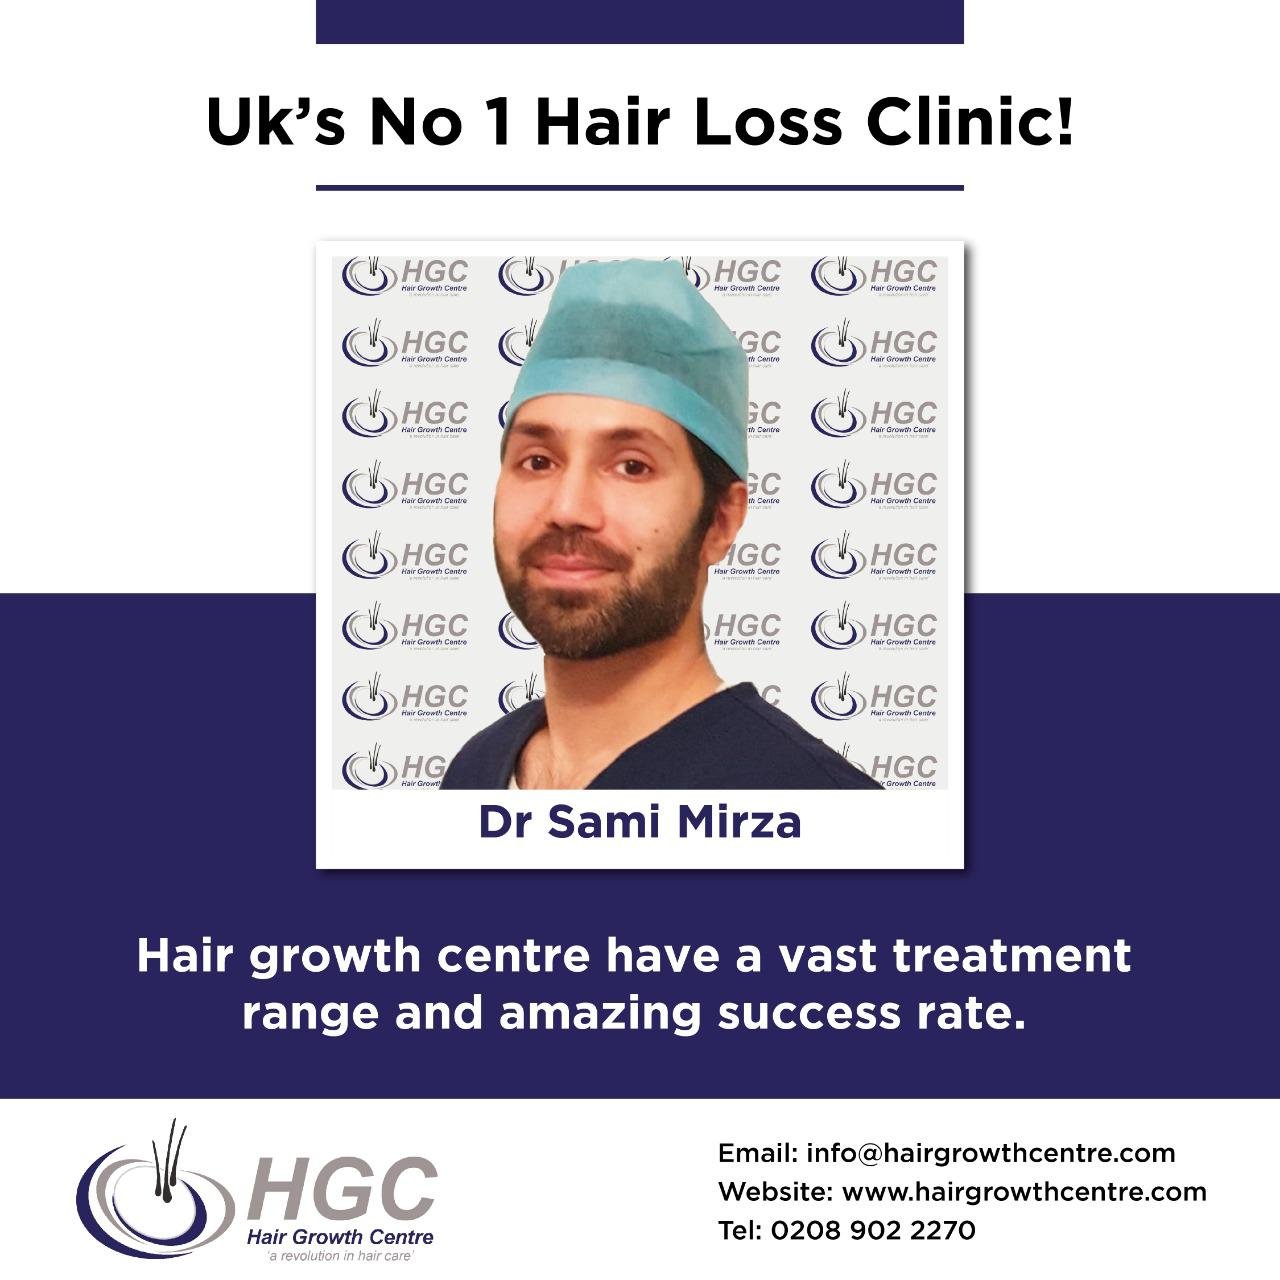 Hair Transplant Clinic | Hair Loss Treatment for Men & Women in London UK | Hair  Growth Centre